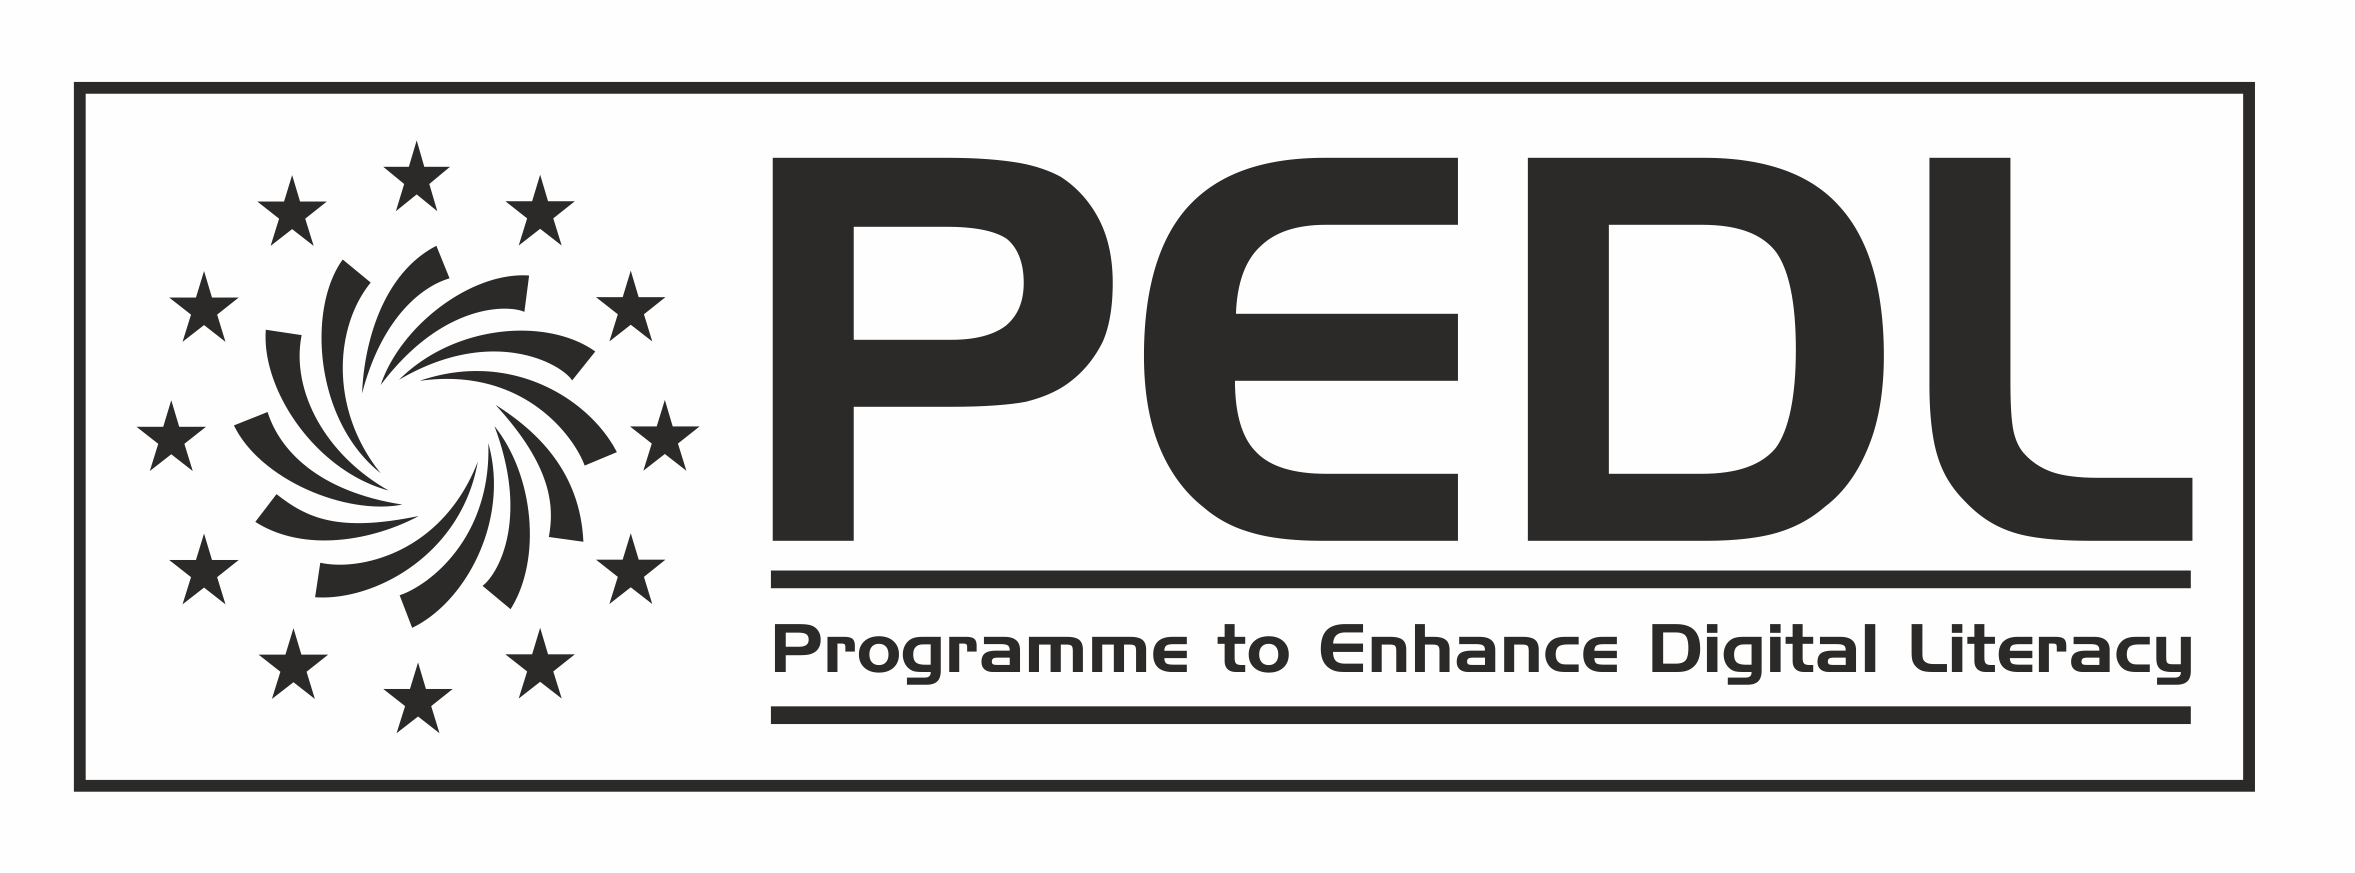 PEDL (Programme to Enhance Digital Literacy)